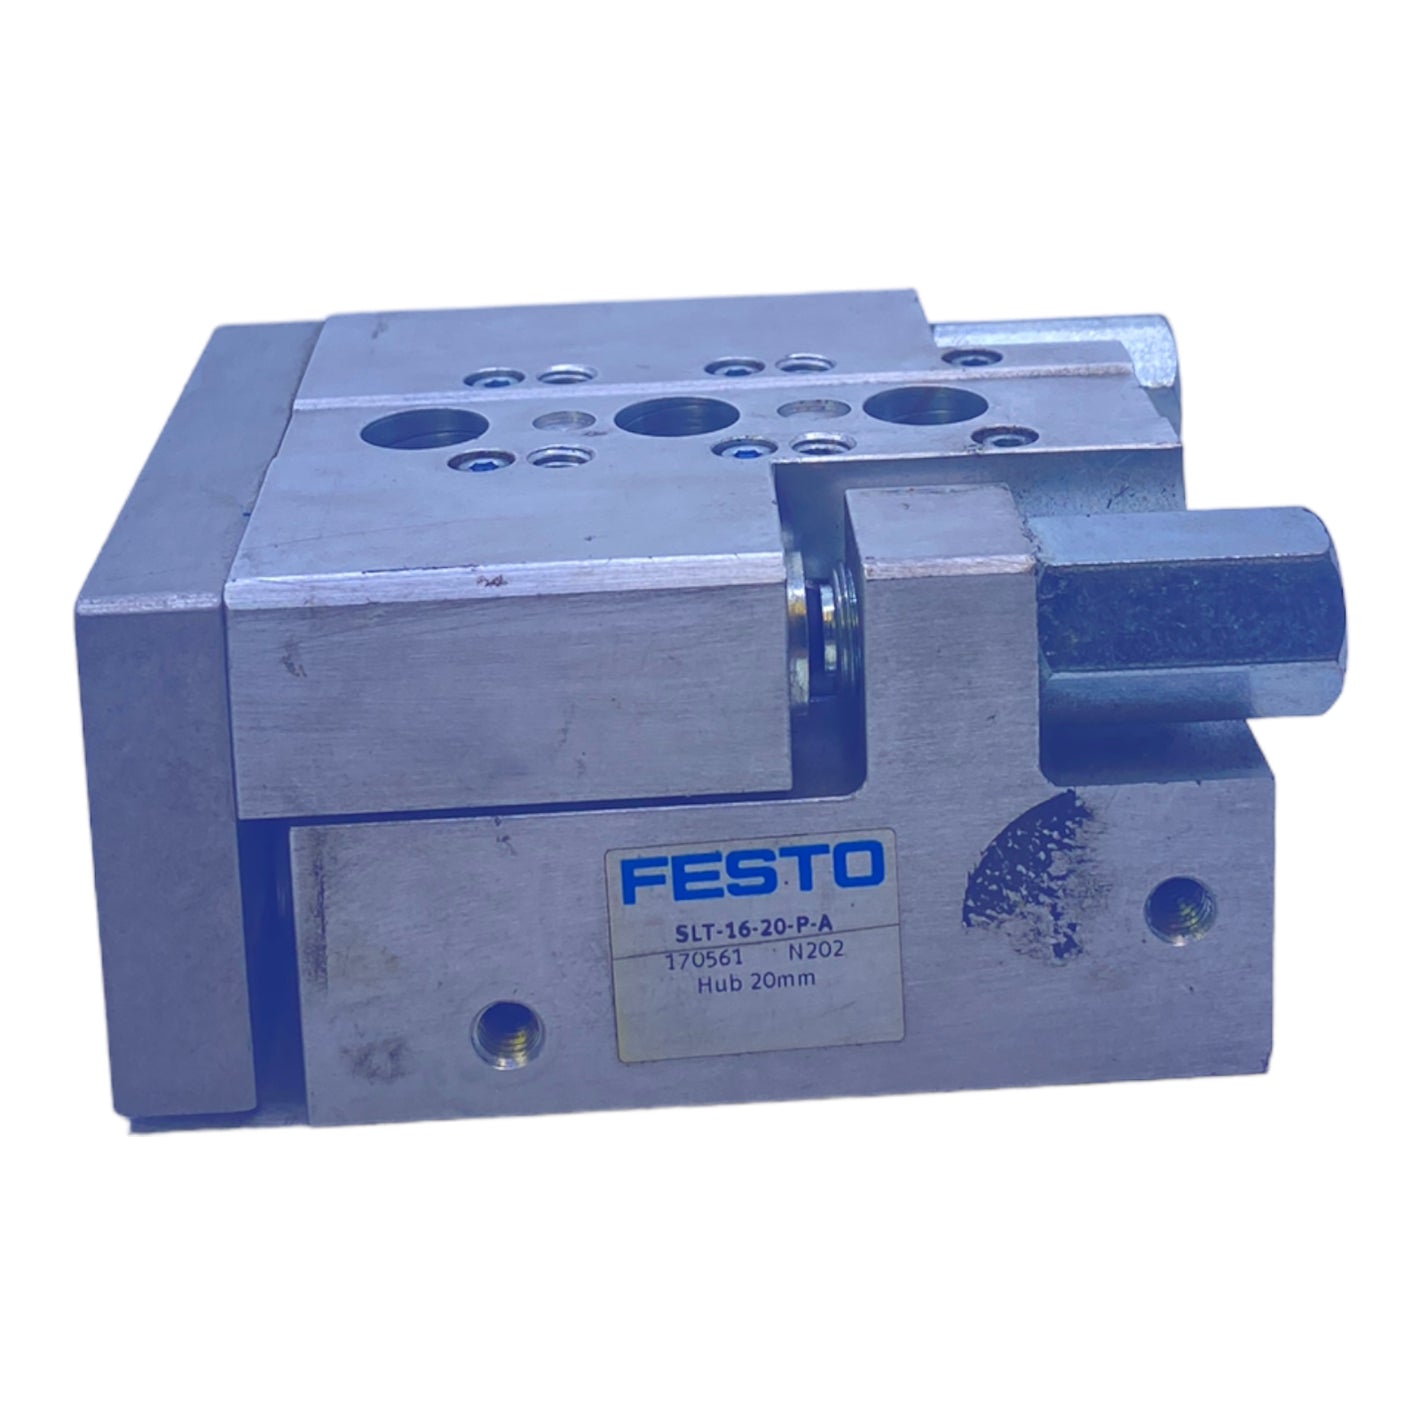 Festo SLT-16-20-PA 170561 Mini slide pneumatic 